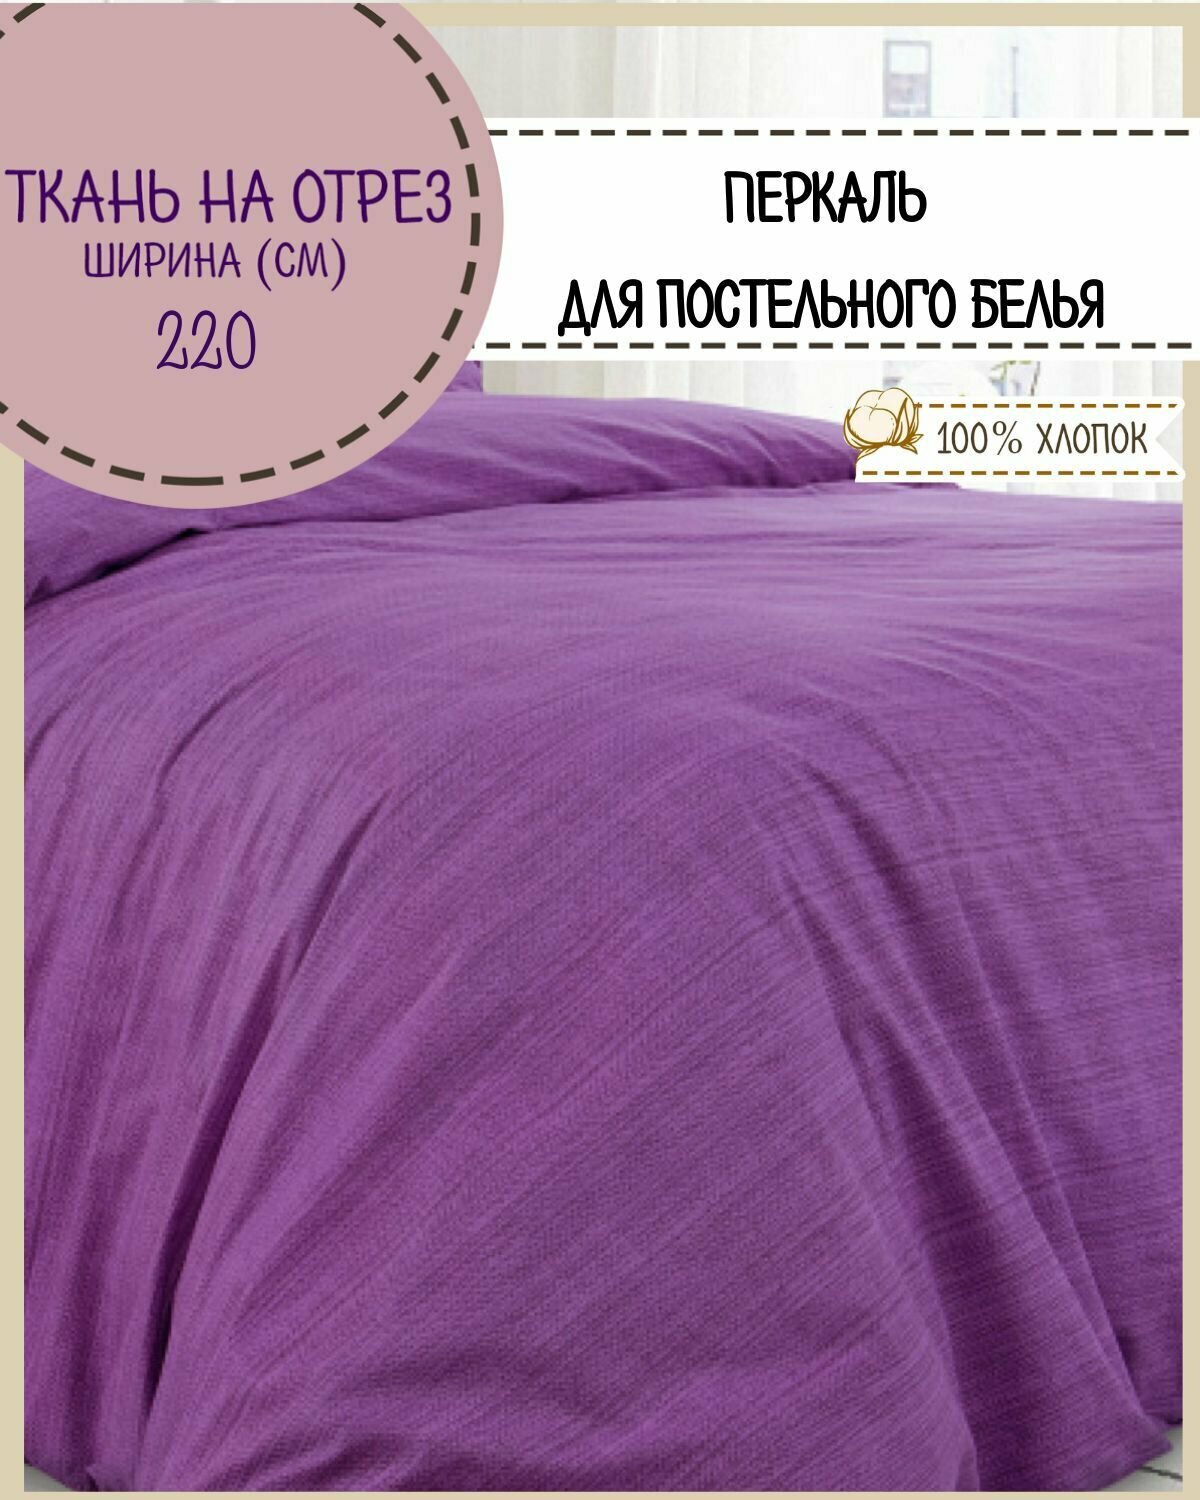 Ткань Перкаль для постели "Эко", цв. фиолетовый, пл. 115 г/м2, ш-220 см, на отрез, цена за пог. метр